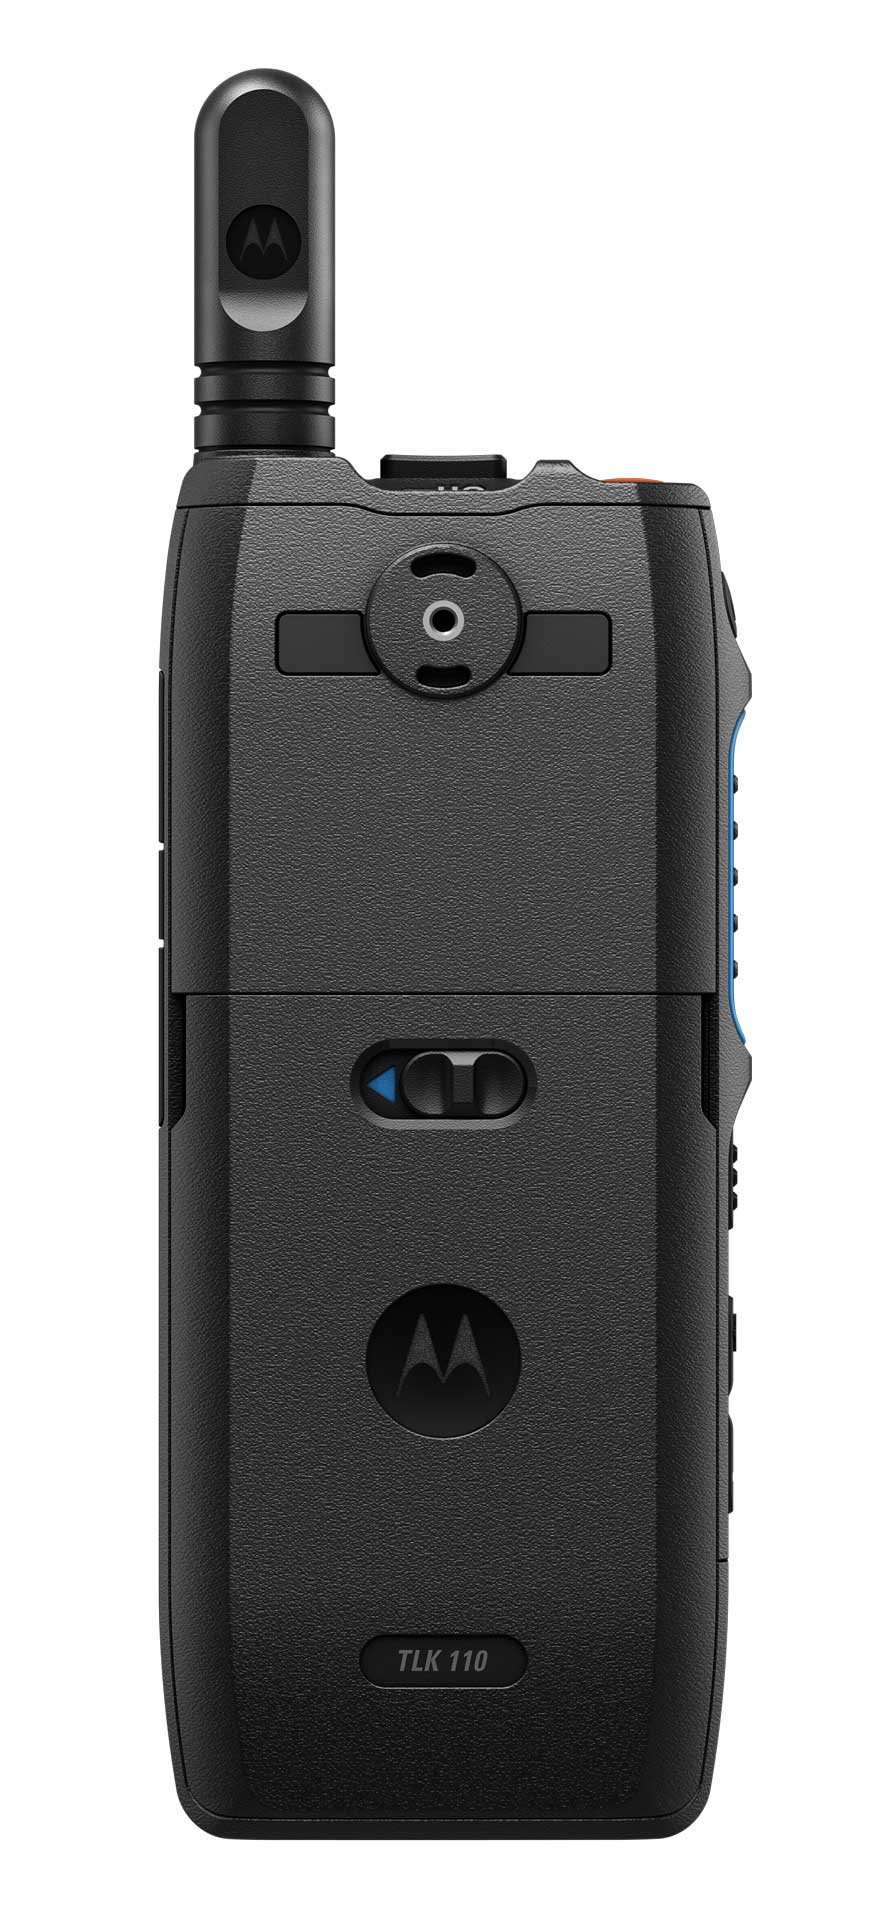 Motorola WAVE PTX Handfunkgerät TLK110 Ladegerät Batterie HK2189A ohne SIM